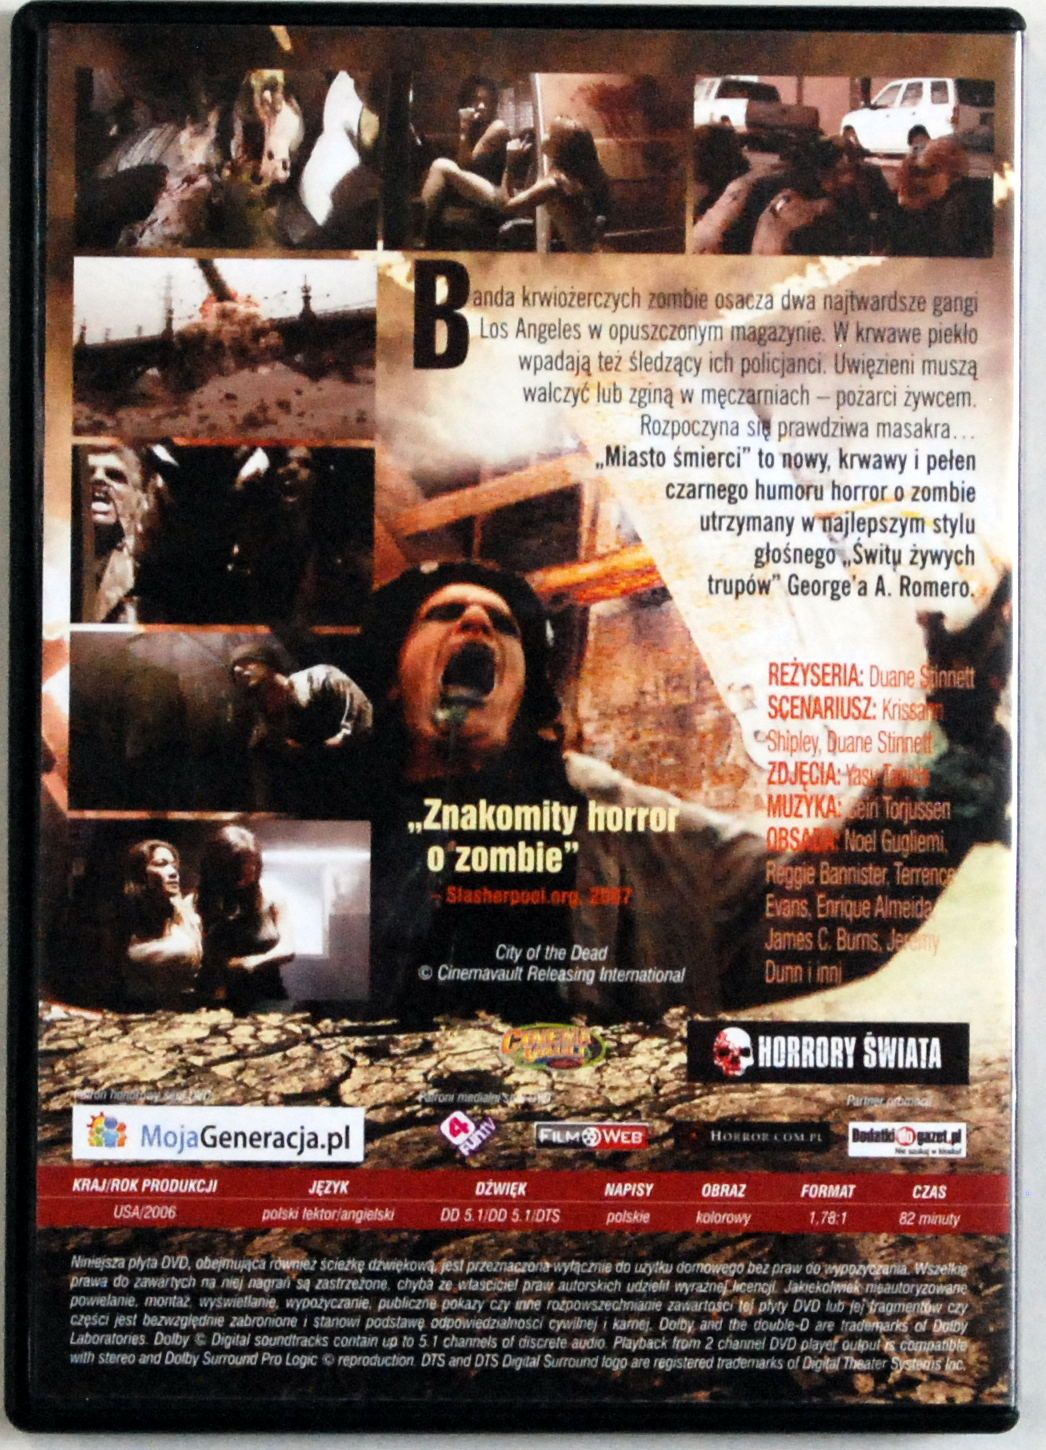 DVD Miasto Śmierci (Duane Stinnett) (IDG)